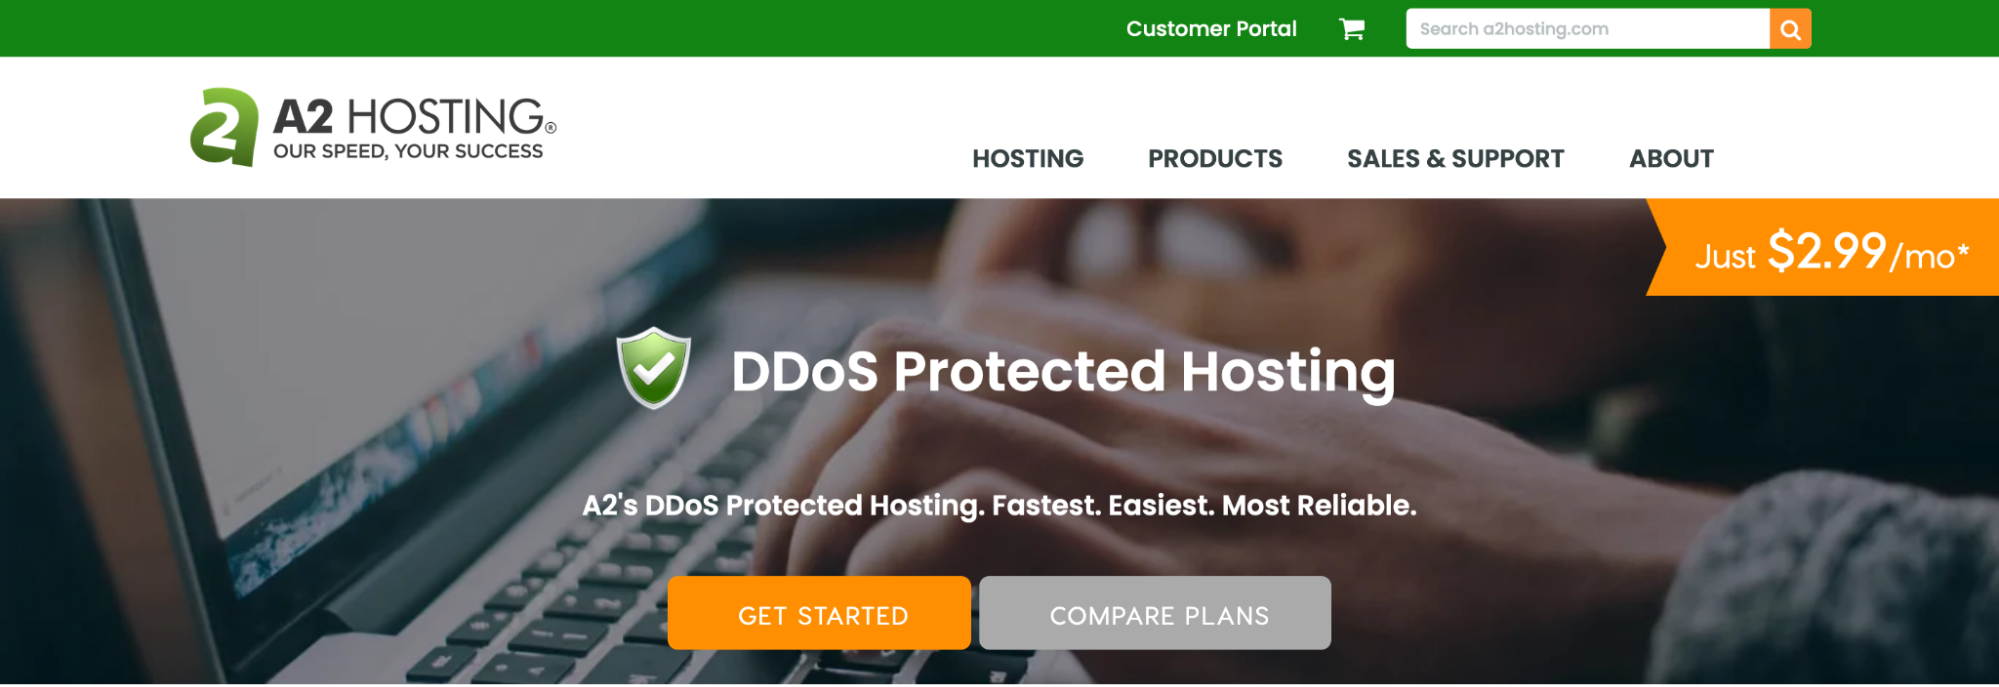 A2 Hosting DDos Protection Landing